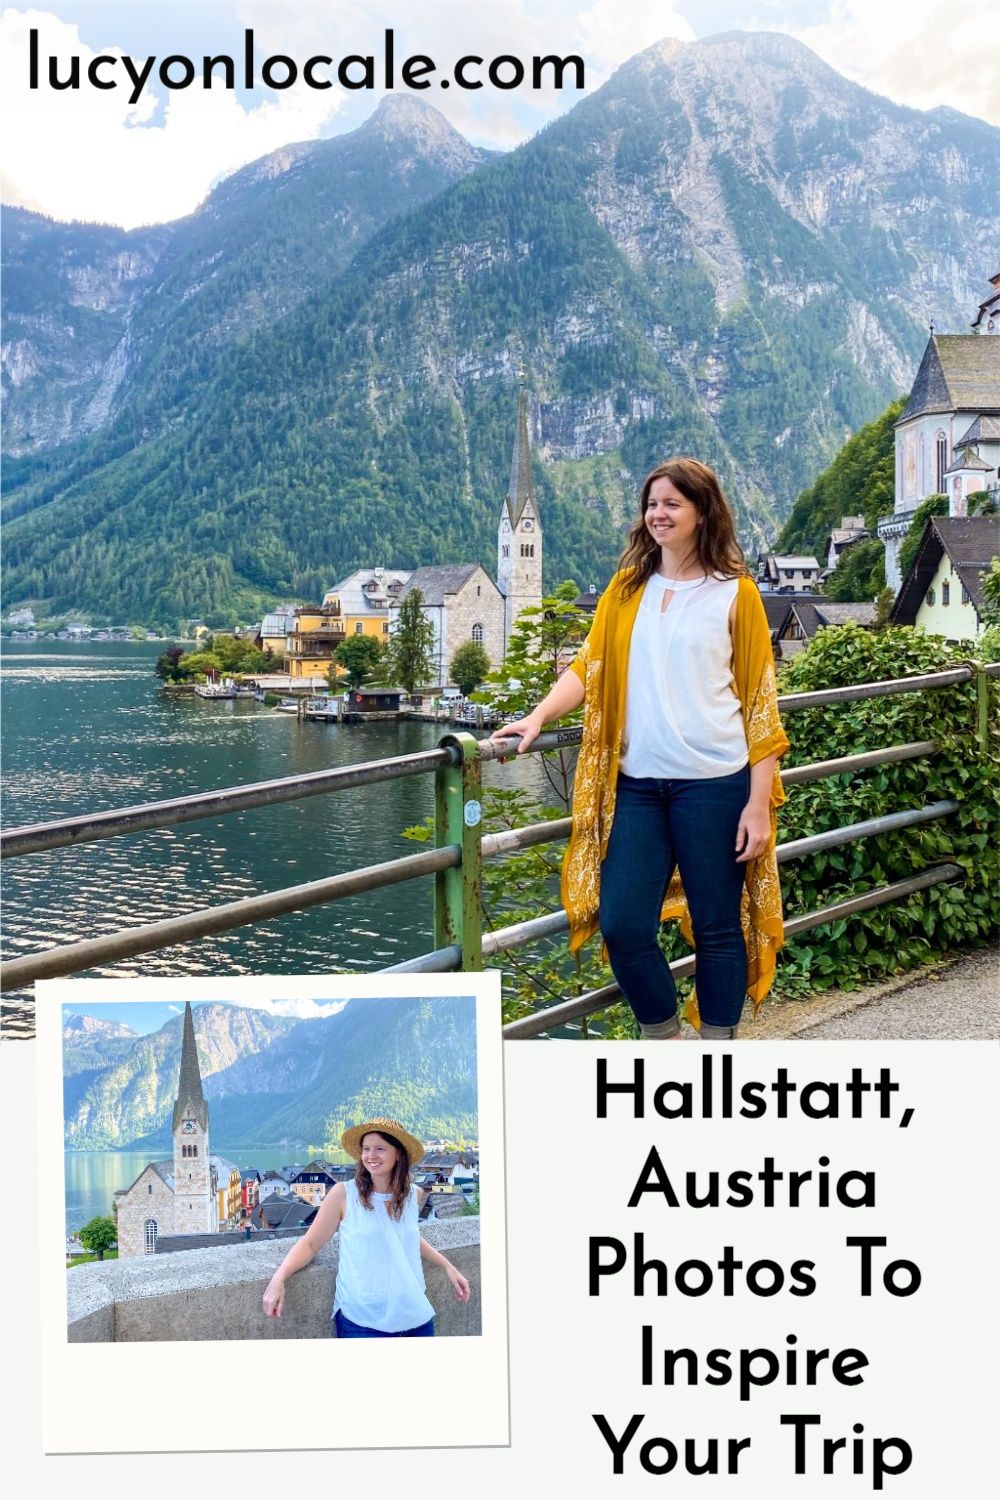 Hallstatt, Austria photos to inspire your trip